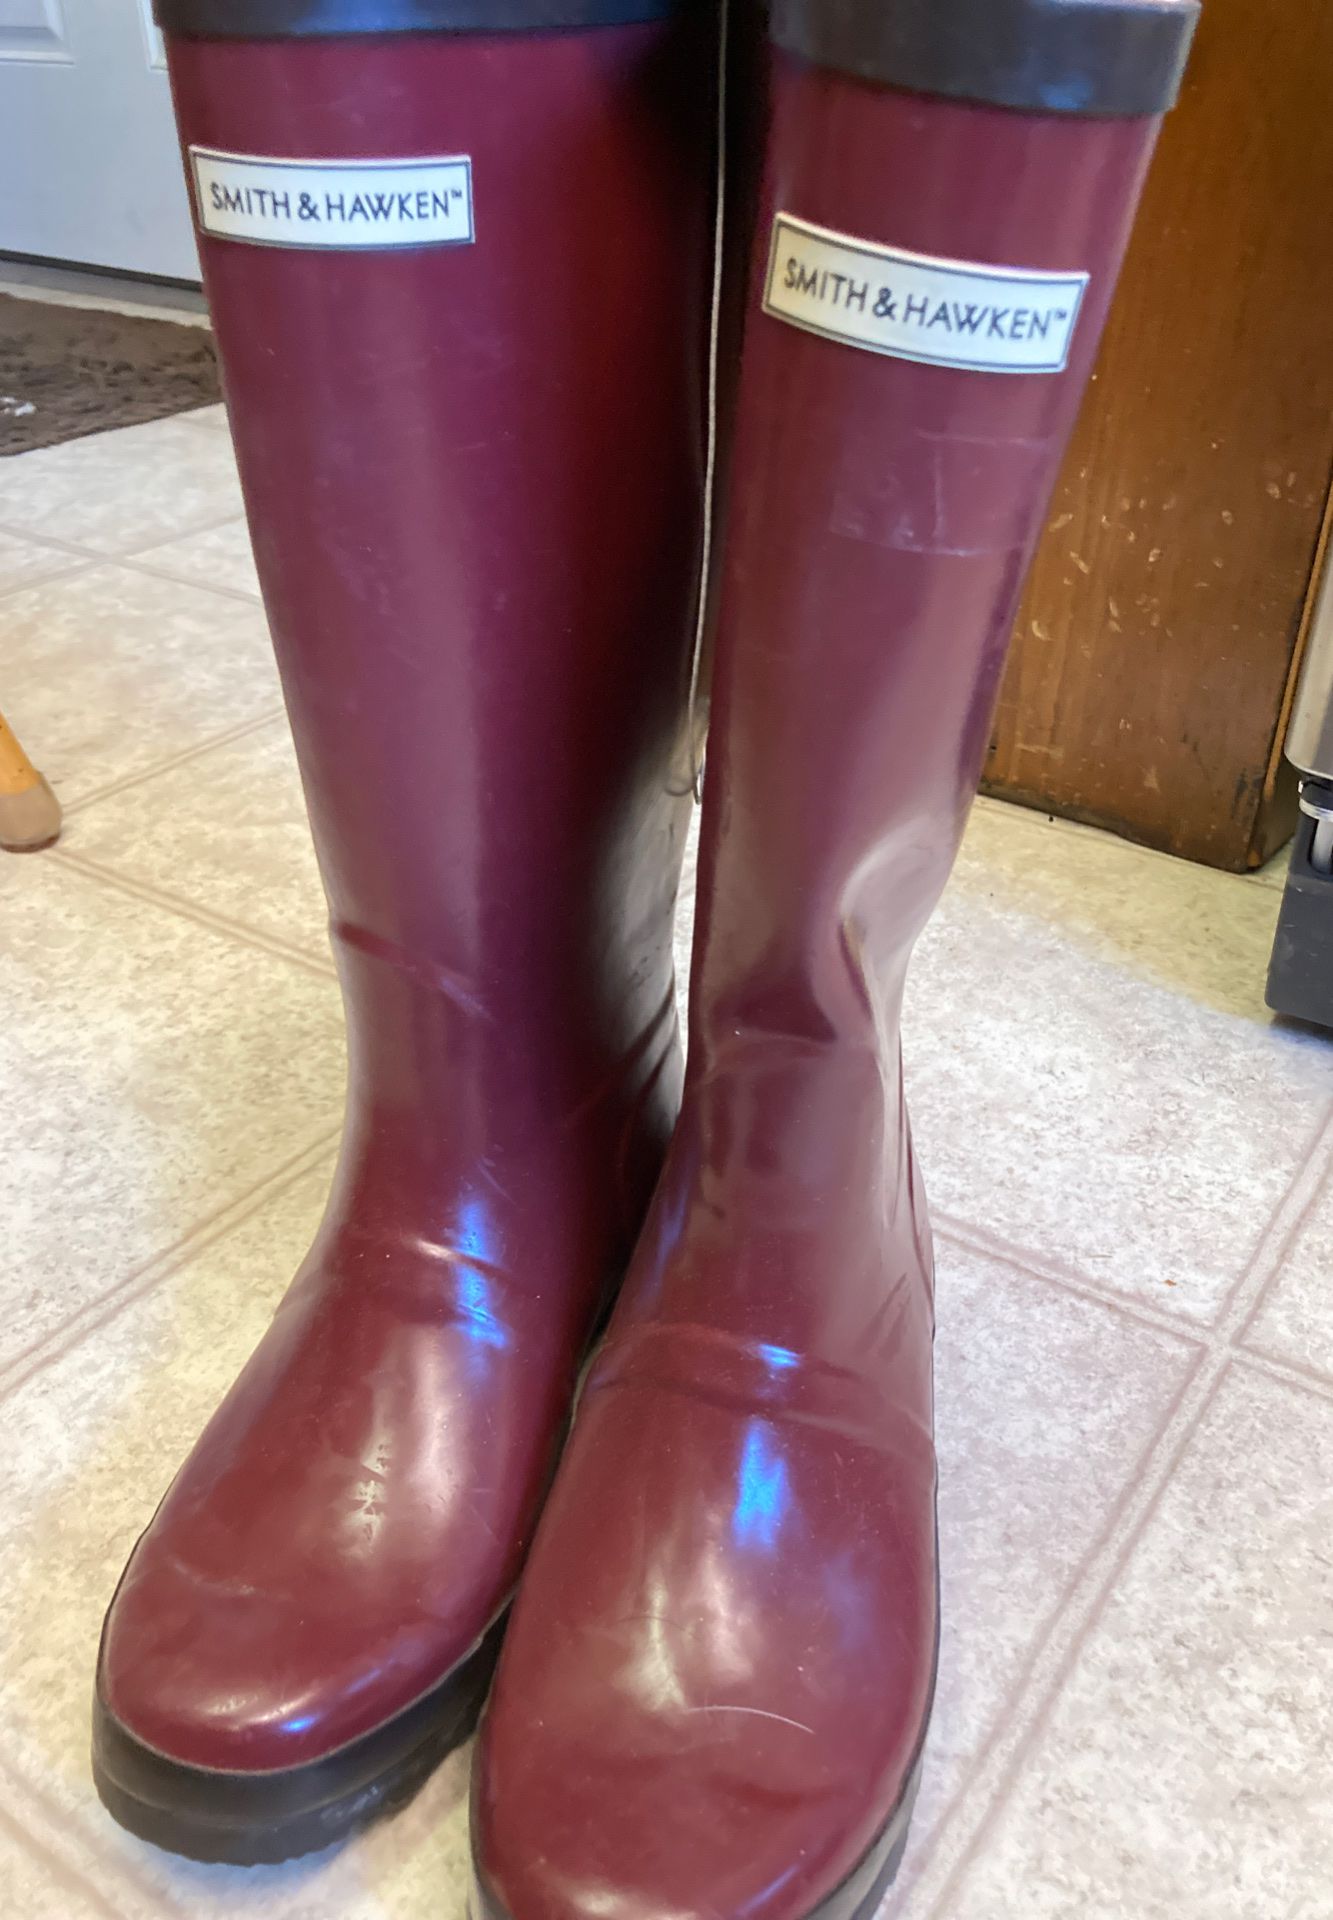 Gardening/rain boots